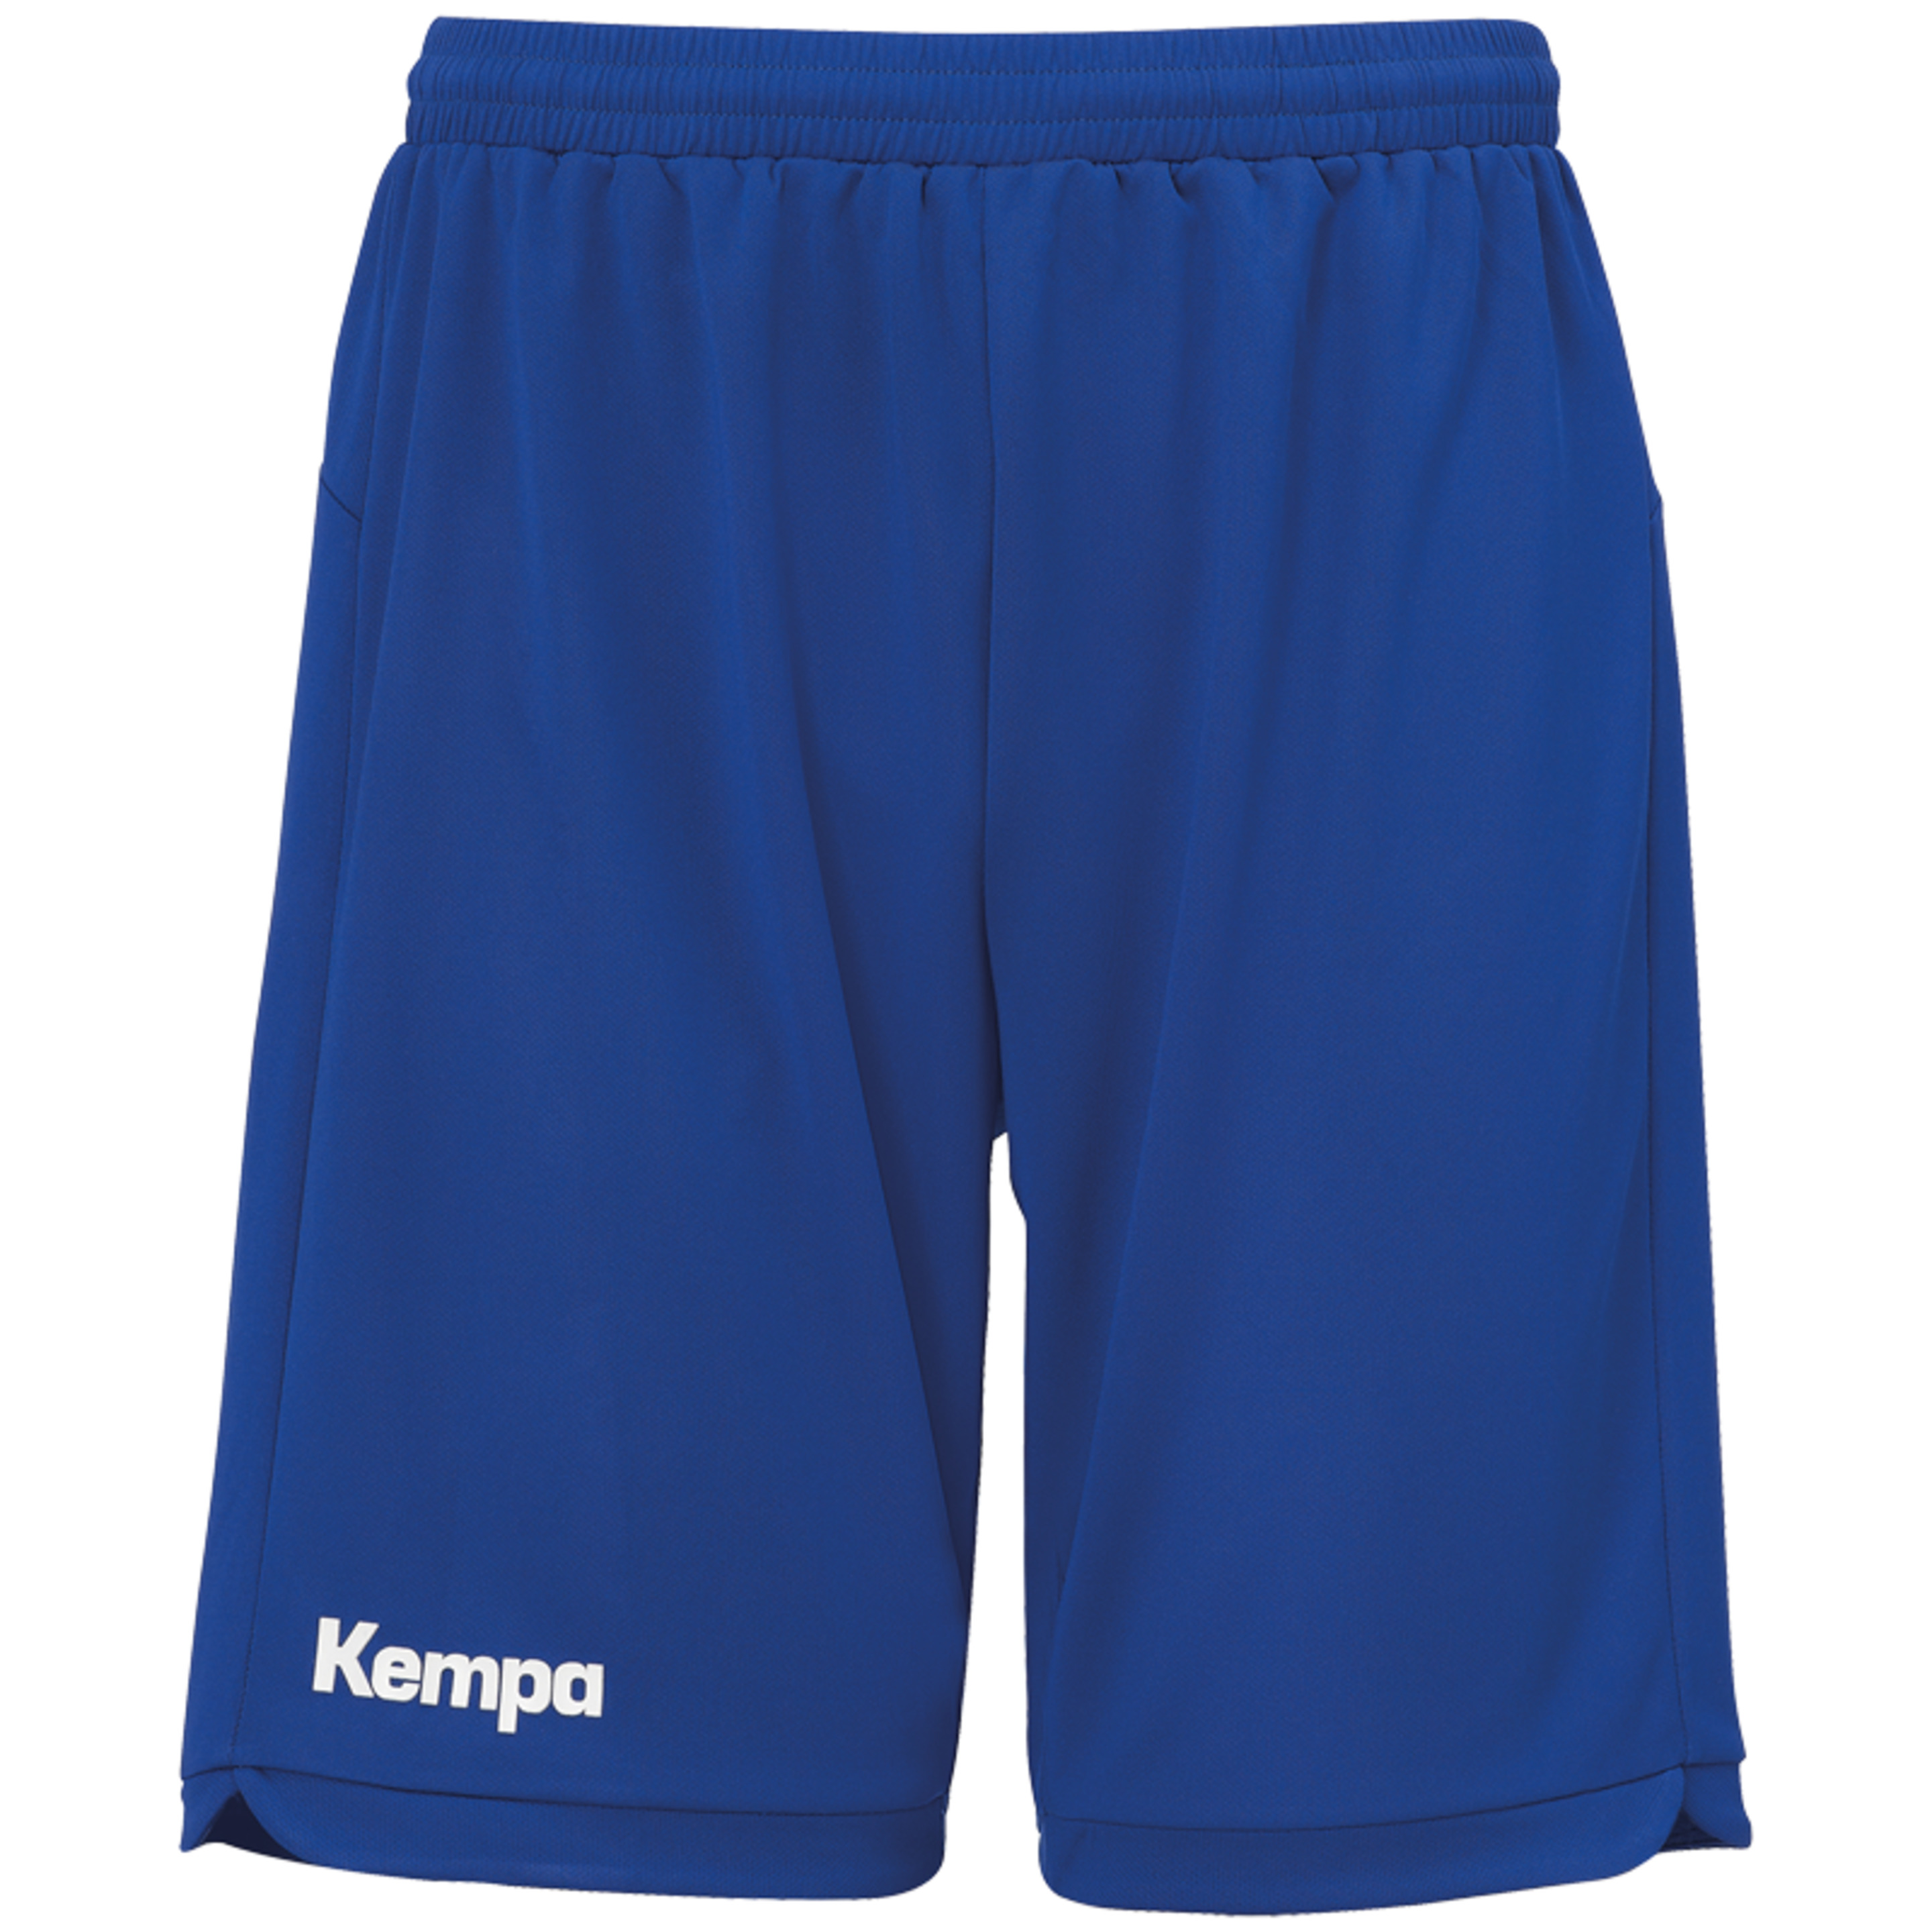 Prime Shorts Azul Royal Kempa - azul - Prime Shorts Azul Royal Kempa  MKP